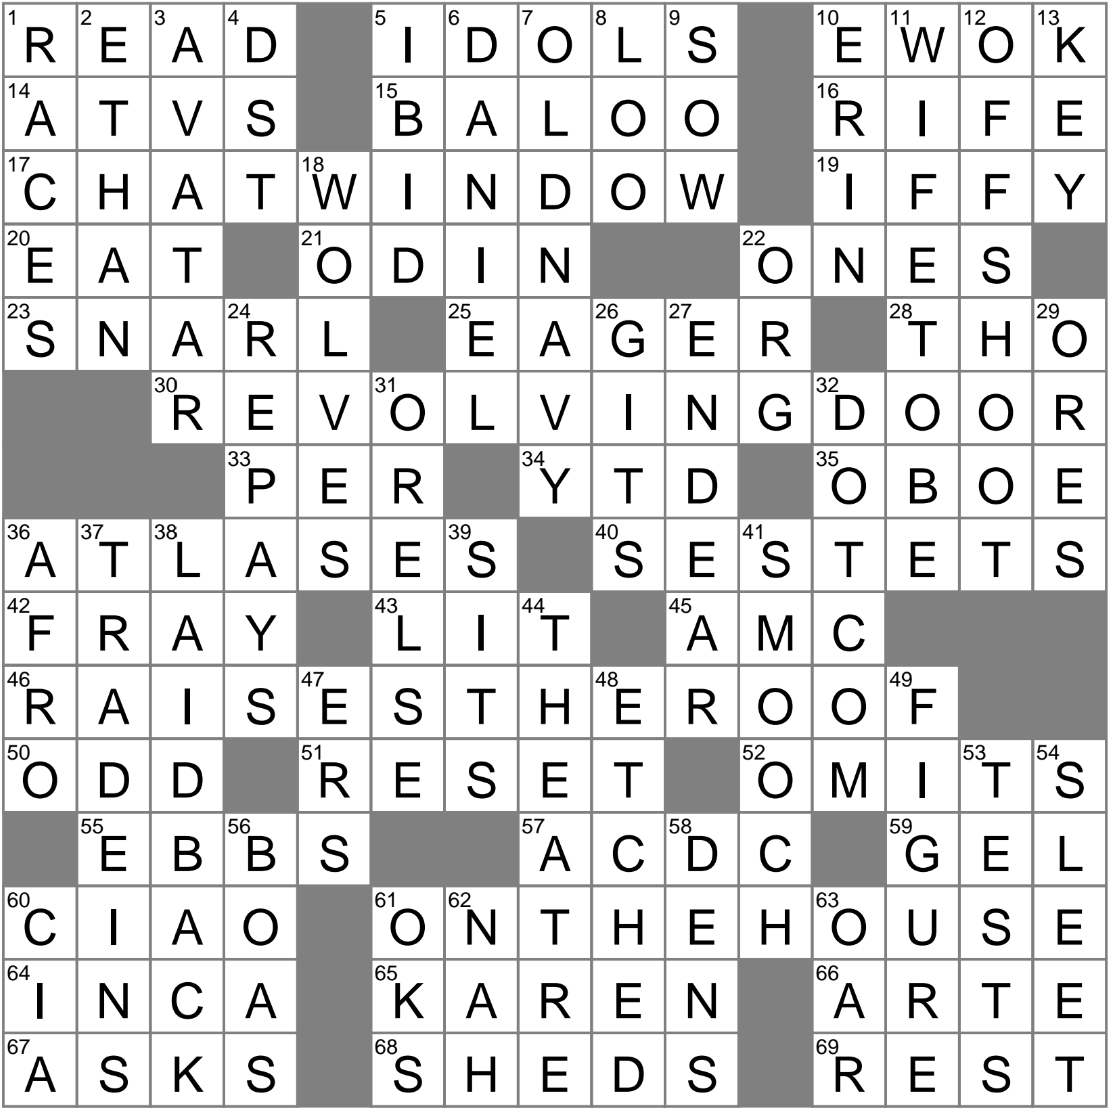 LA Times Crossword 10 Jun 23, Saturday 